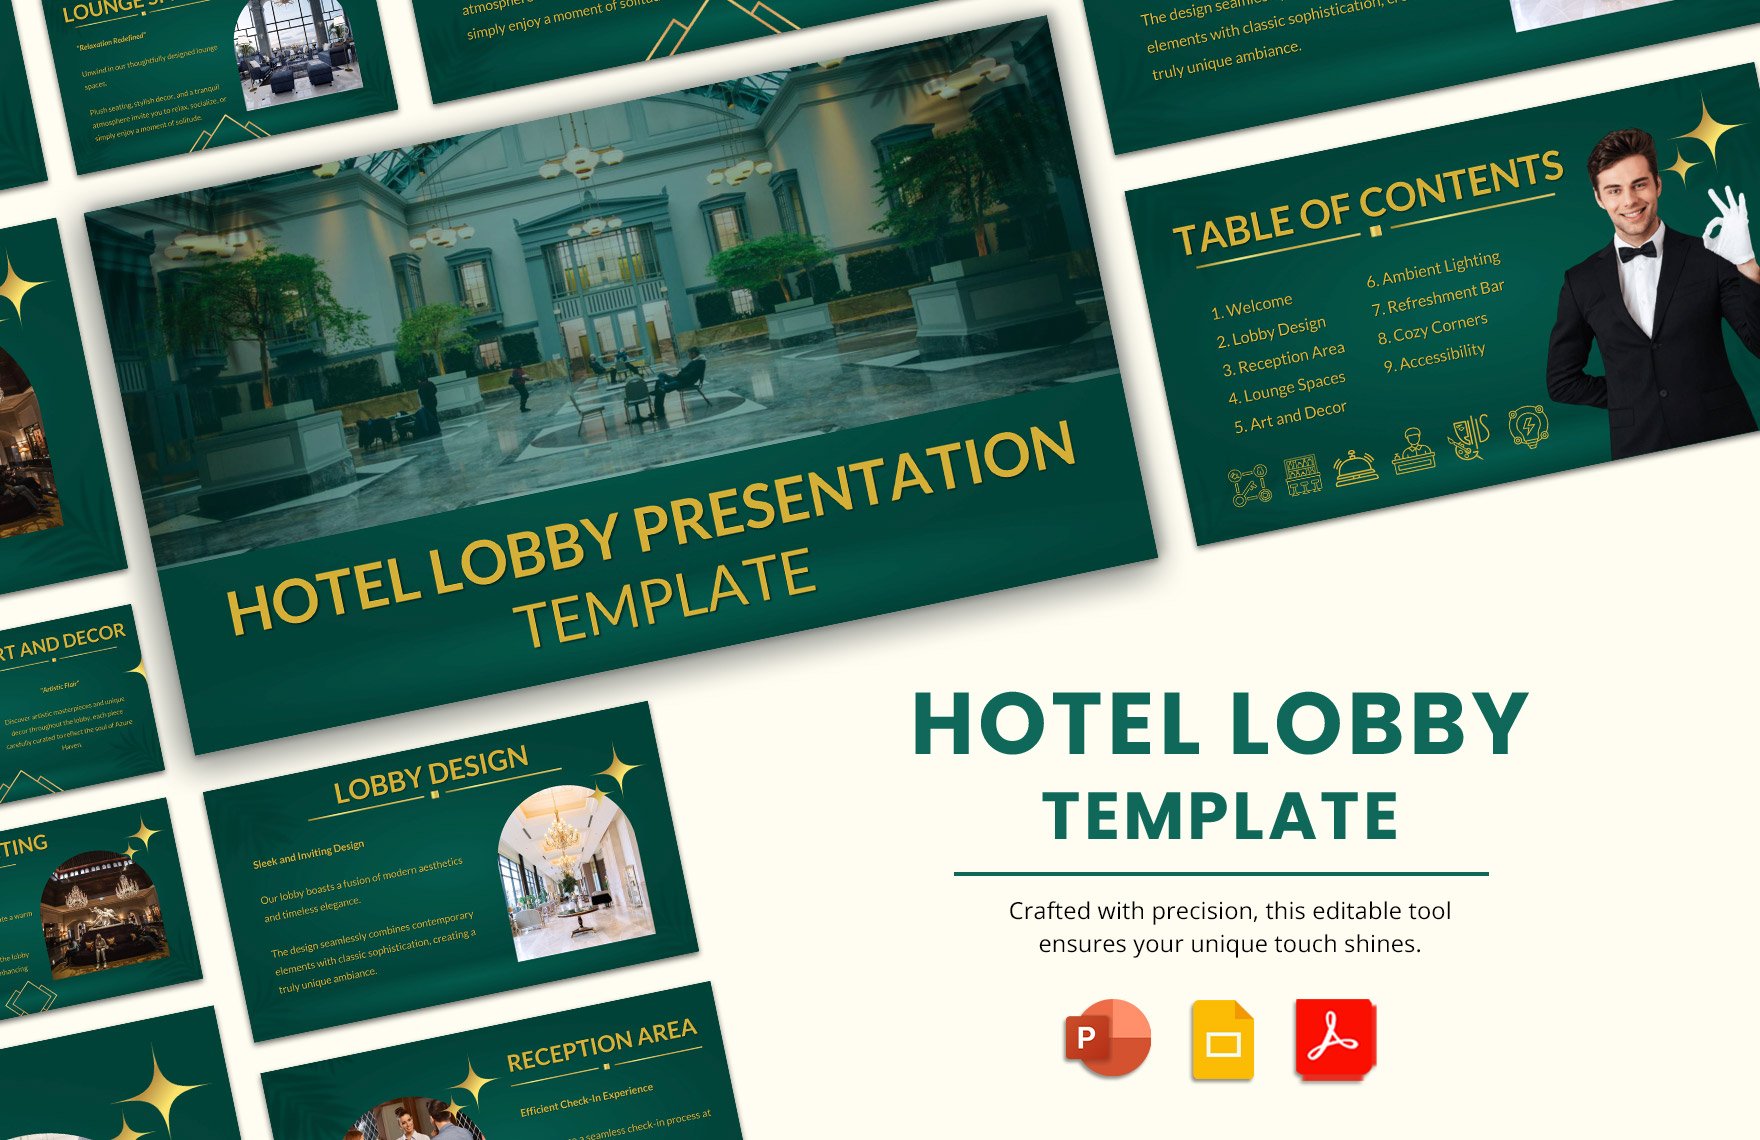 Hotel Lobby Template